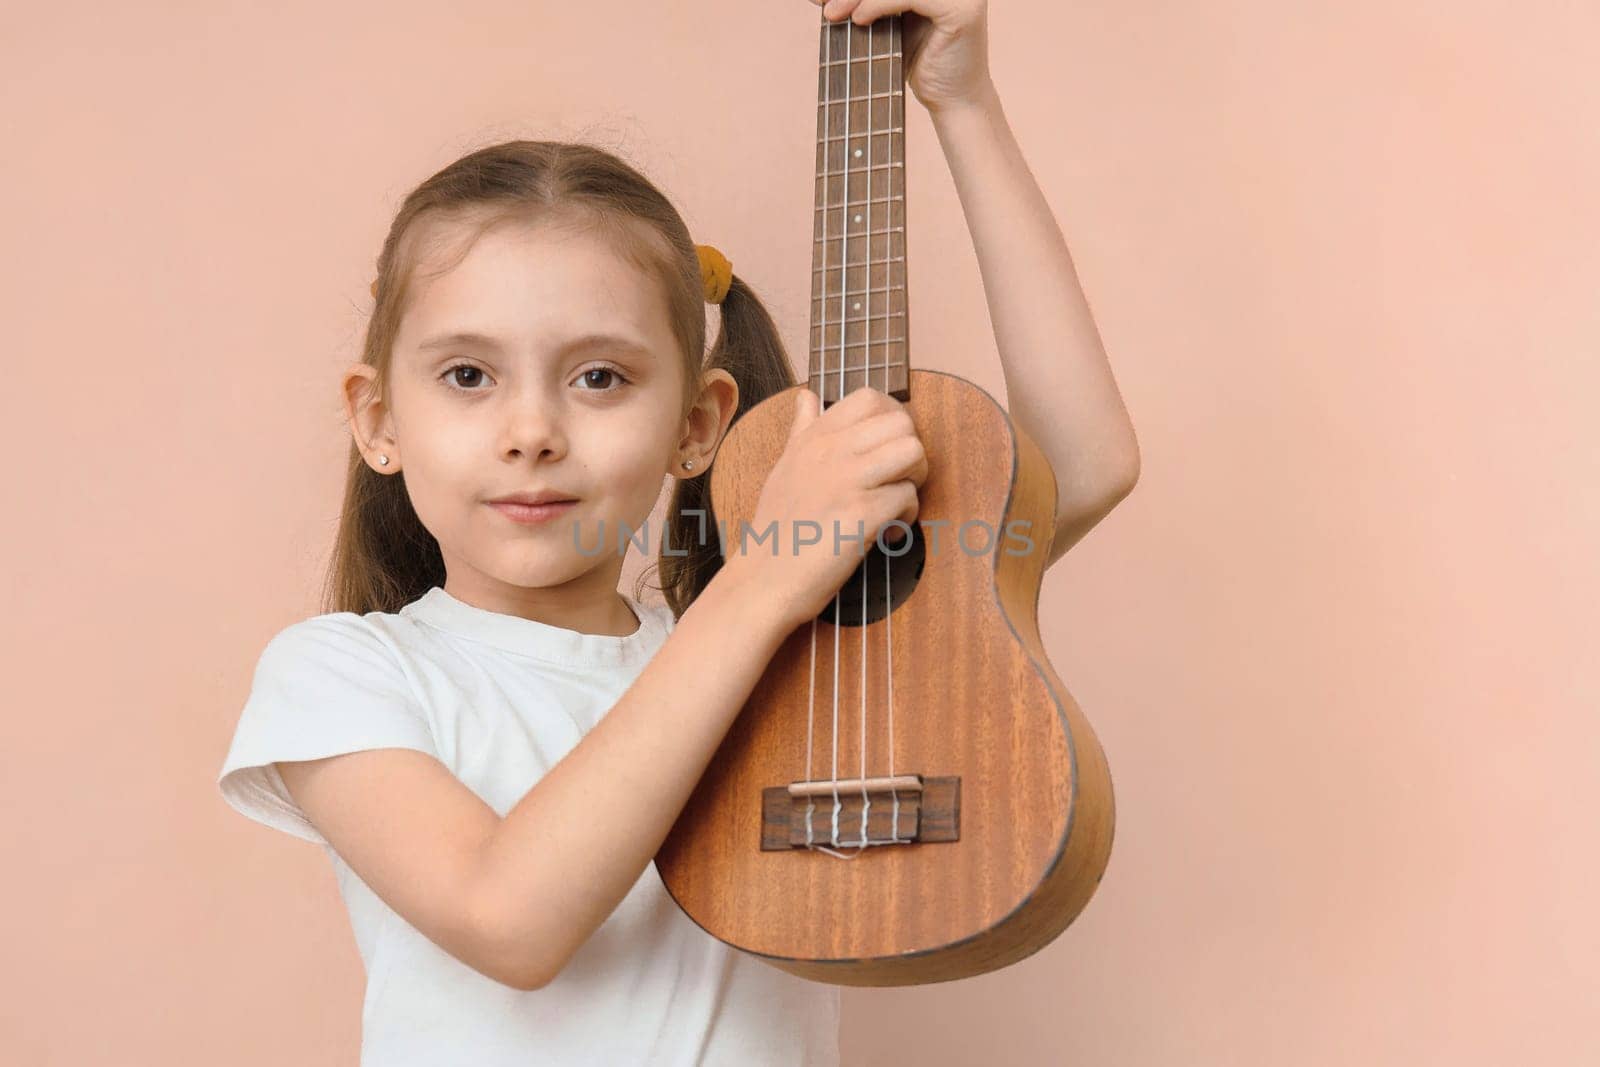 Caucasian preschool girl learns music by playing ukulele.